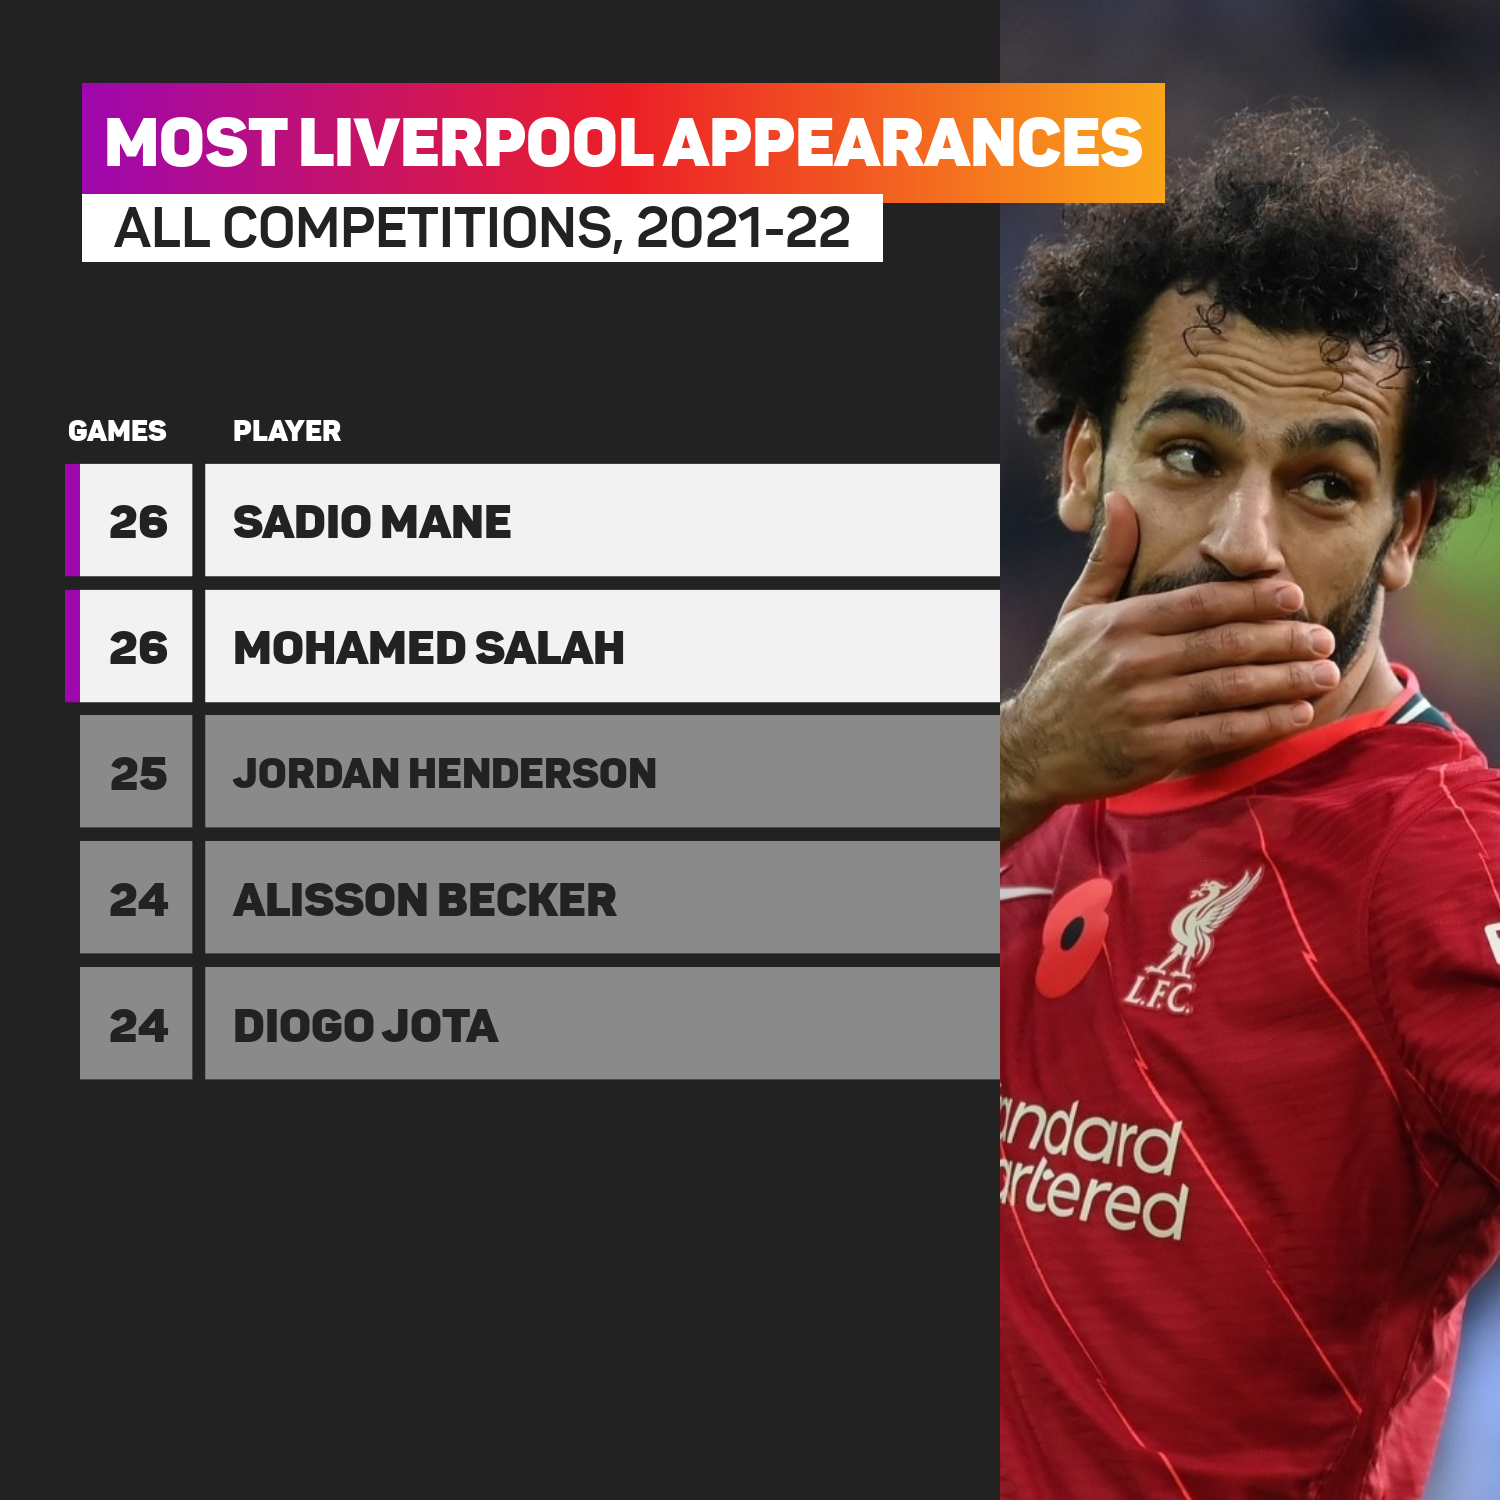 Sadio Mane and Mohamed Salah have been regulars for Liverpool this season